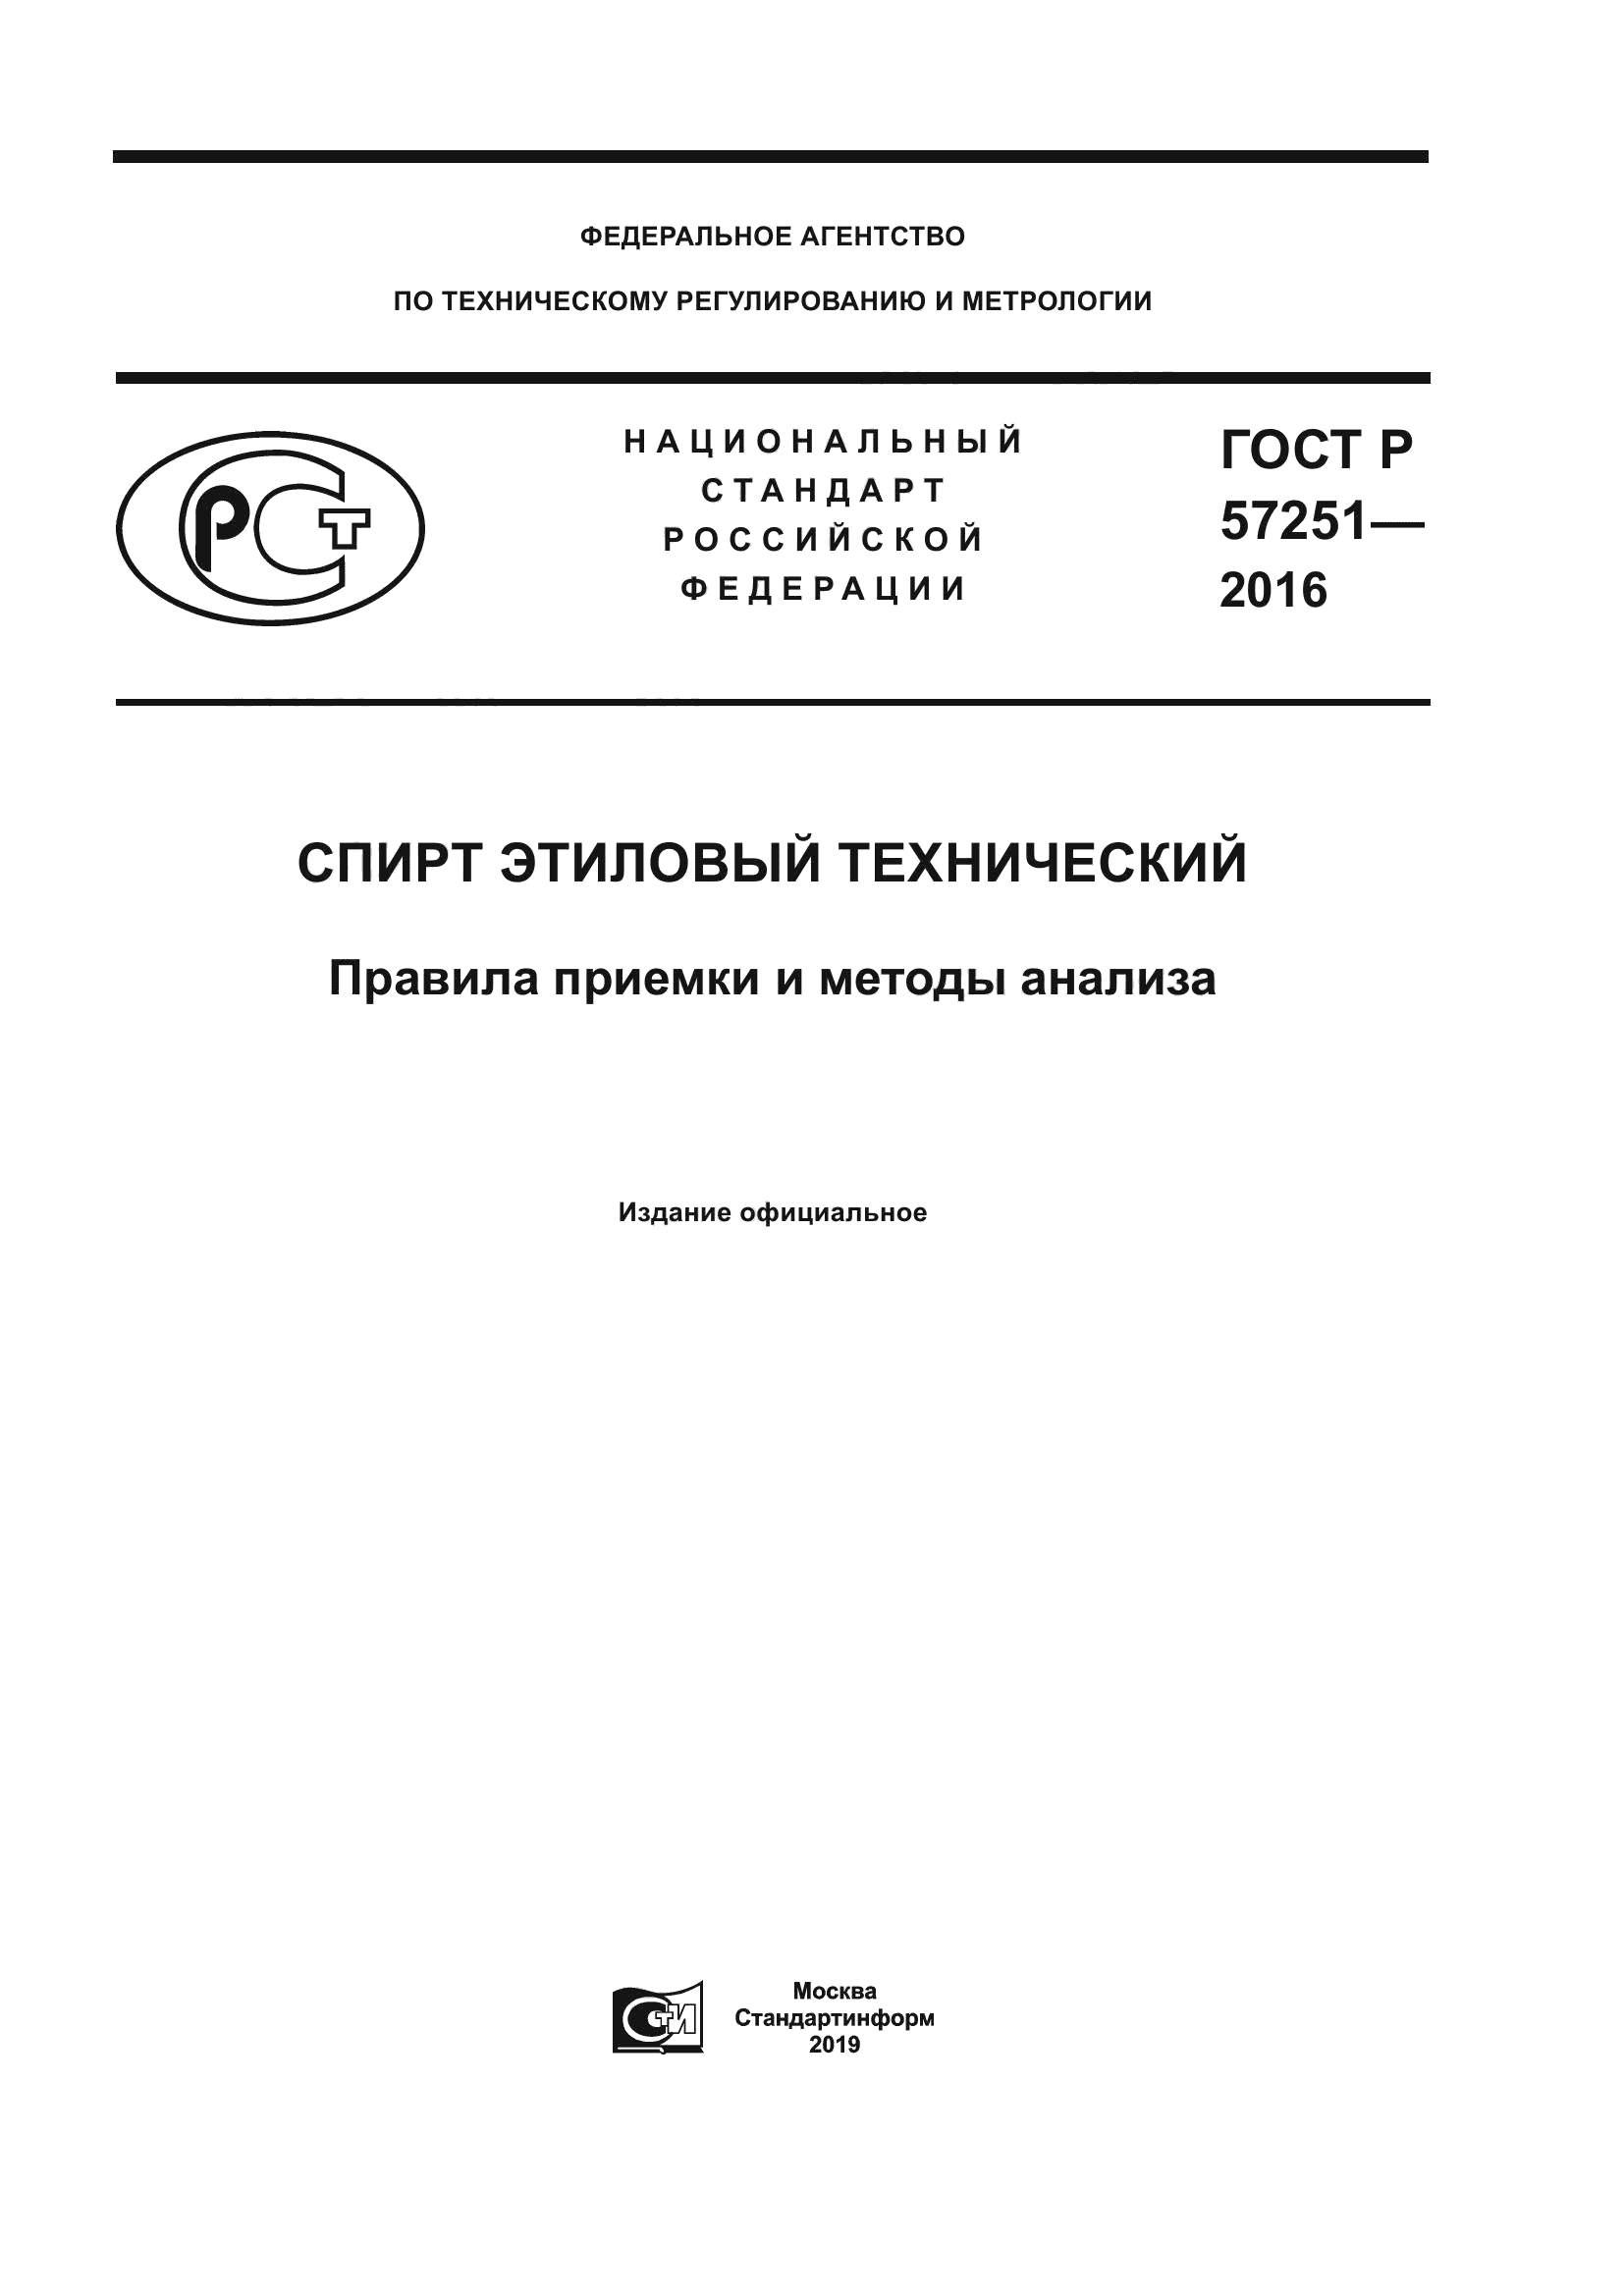 ГОСТ Р 57251-2016